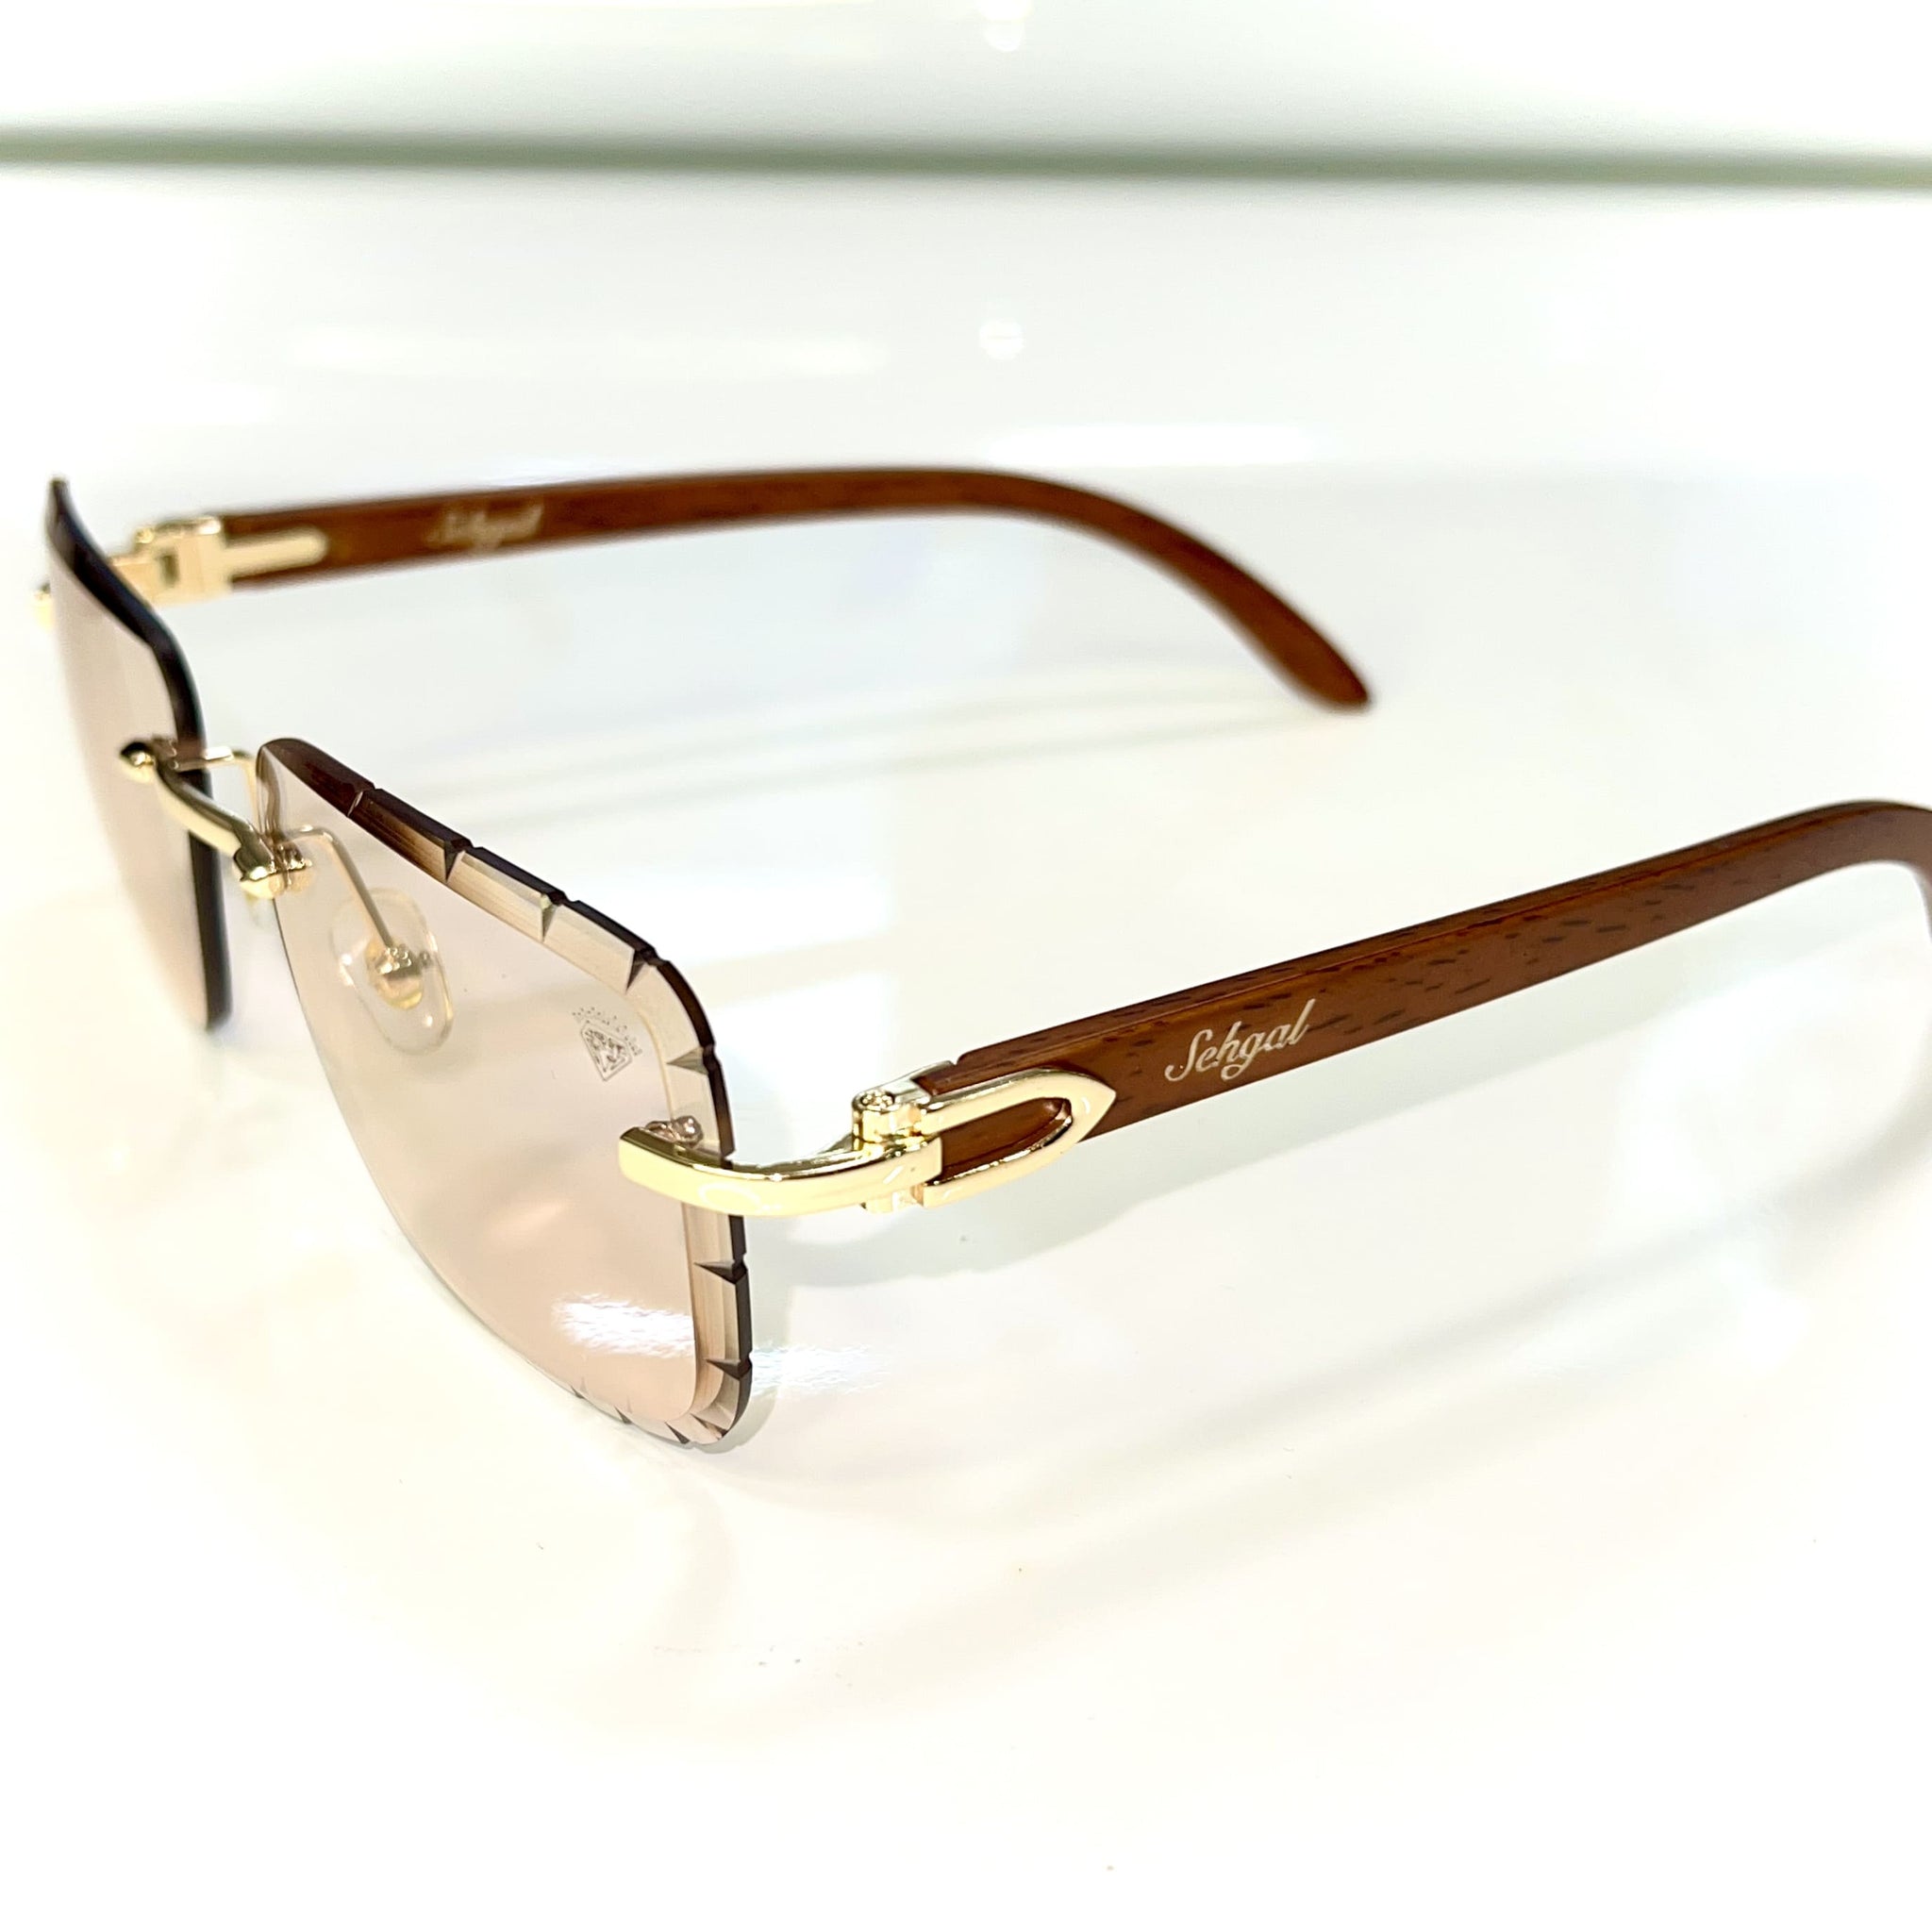 Woodcut 2.0 Glasses - Diamond cut / 14 carat gold plated / Woodgrain side - Caramel Shade - Sehgal Glasses